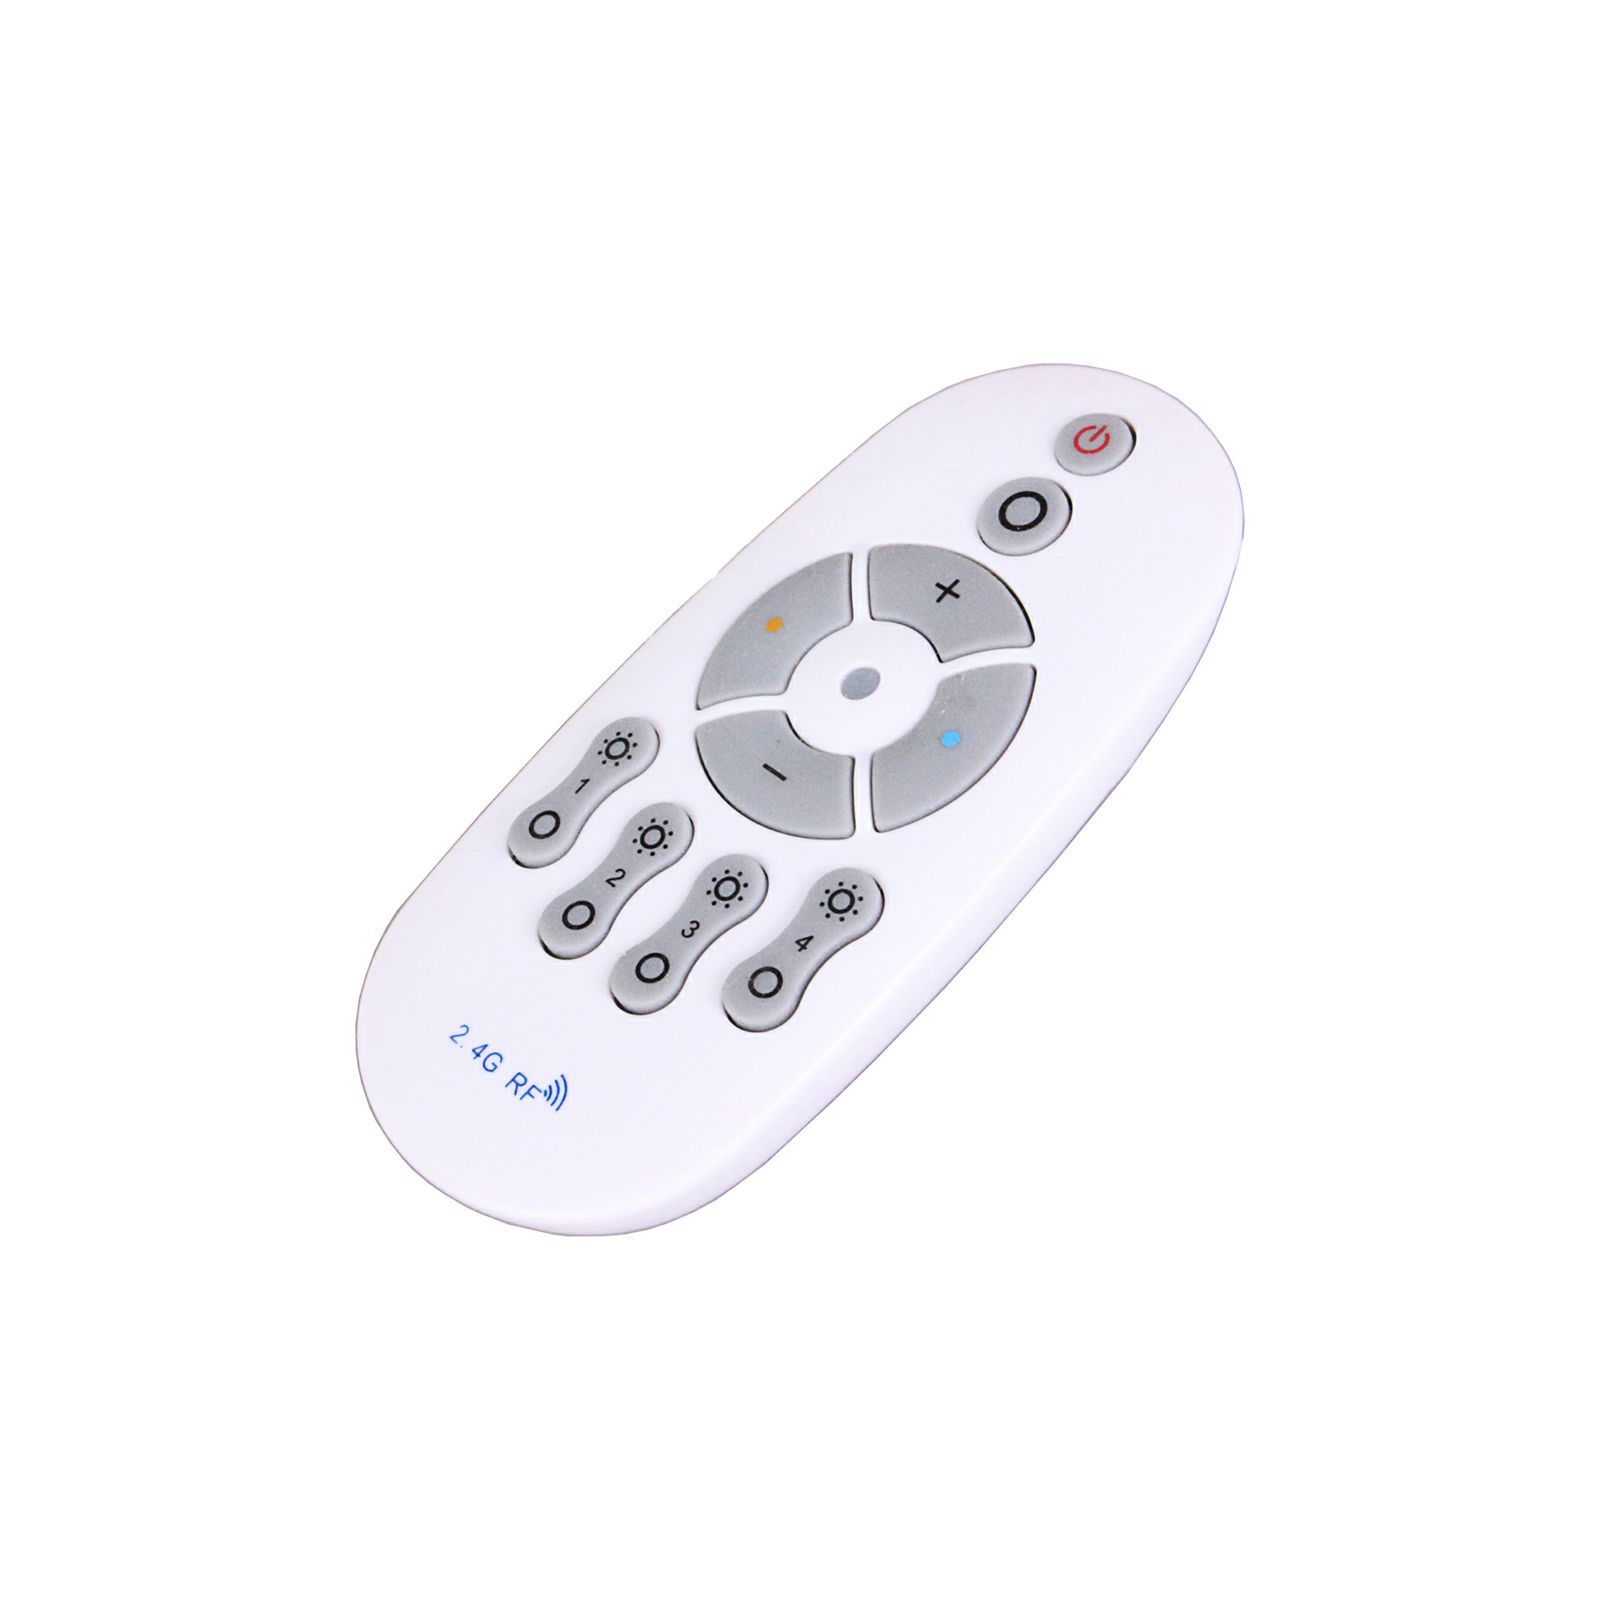 Patona wireless remote control for dimmable transformer adapter 11x5,2x2 cm WiFi daljinski upravljač